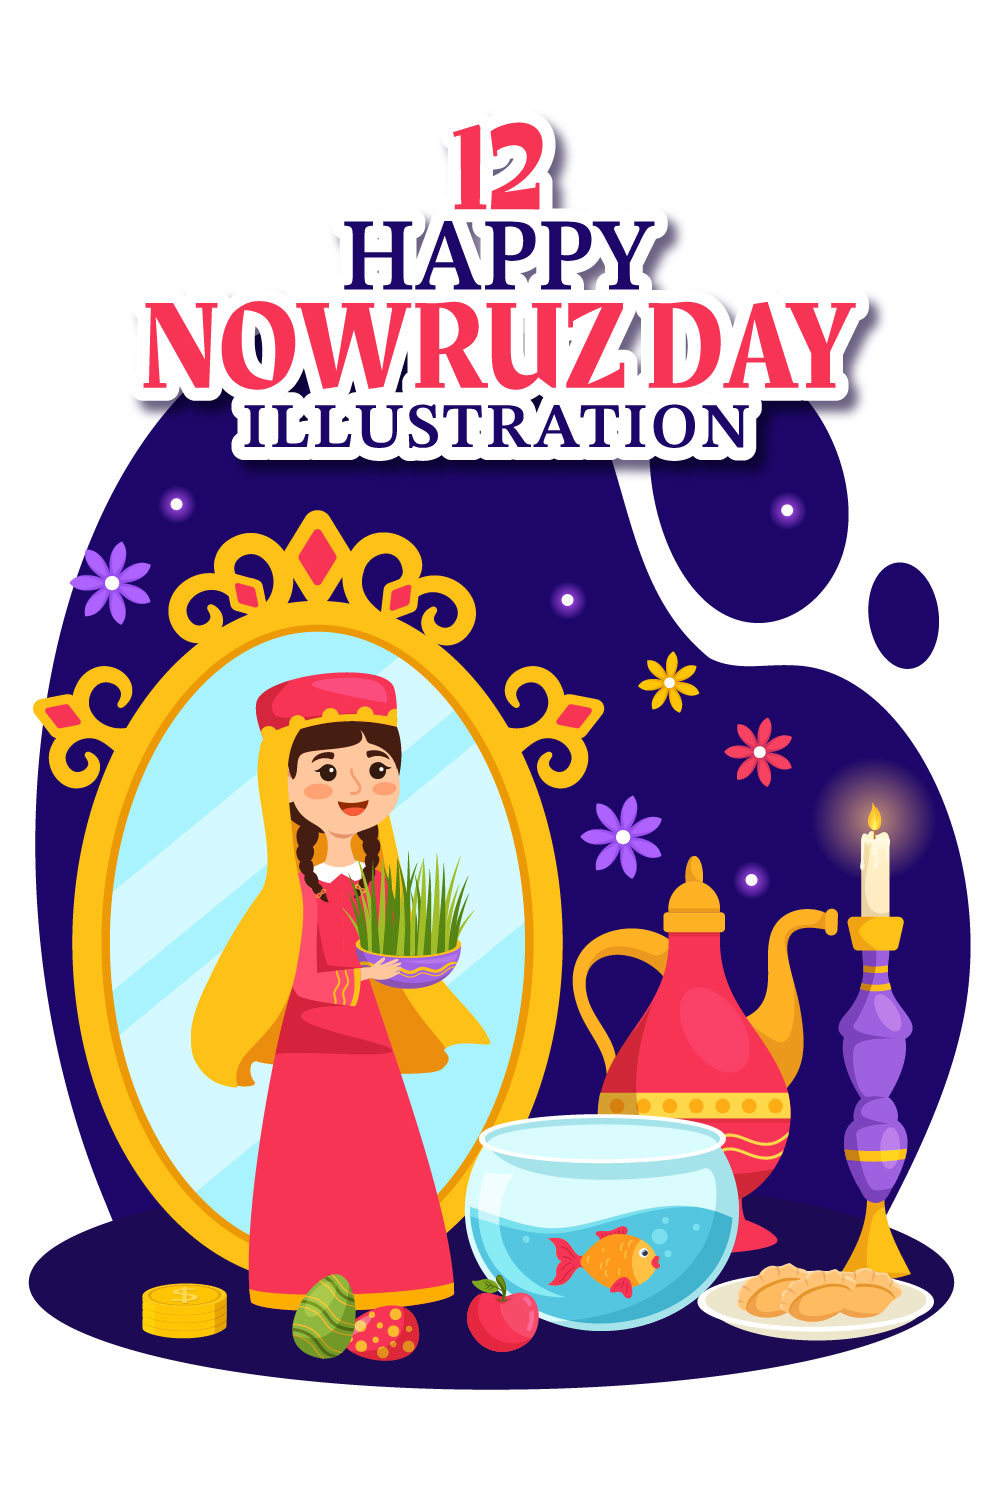 12 Happy Nowruz Day Illustration pinterest preview image.